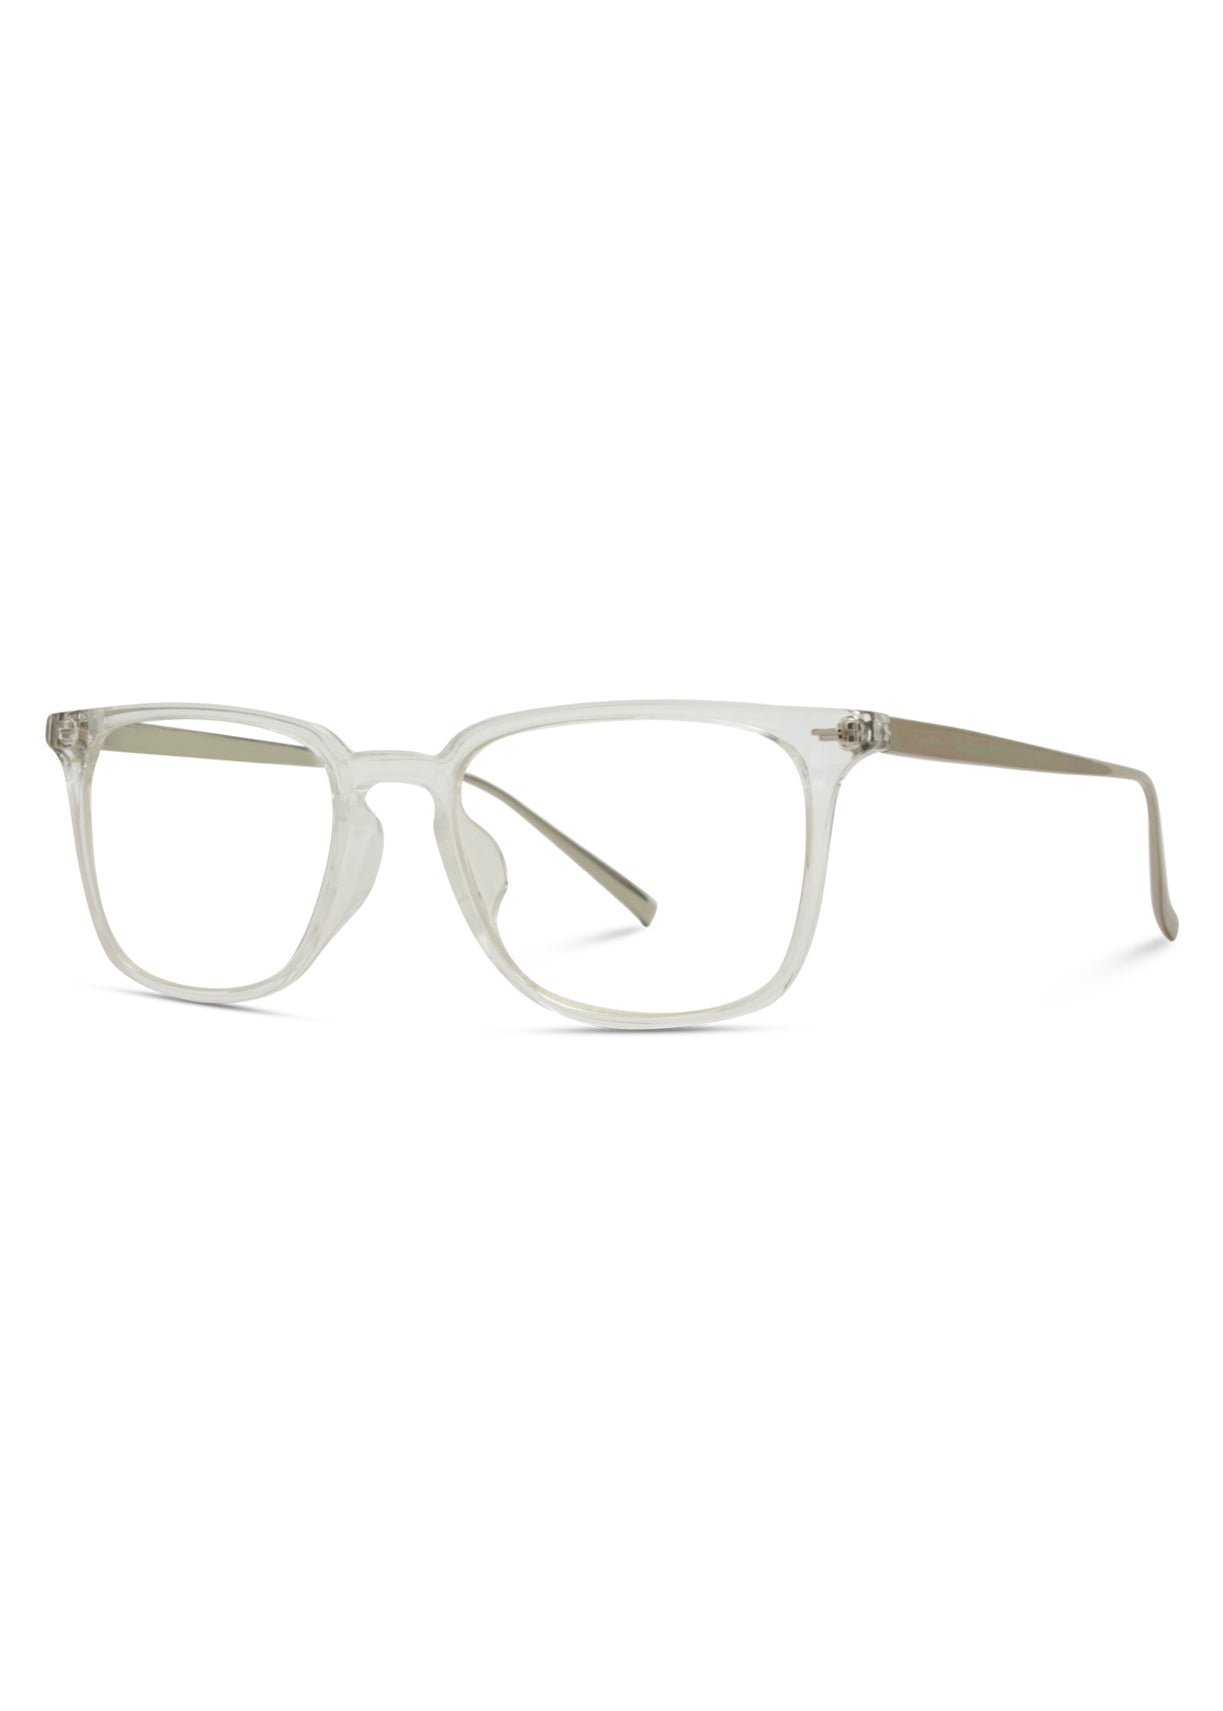 Clear Rectangle Blue Light Glasses - FINAL SALE Accessories